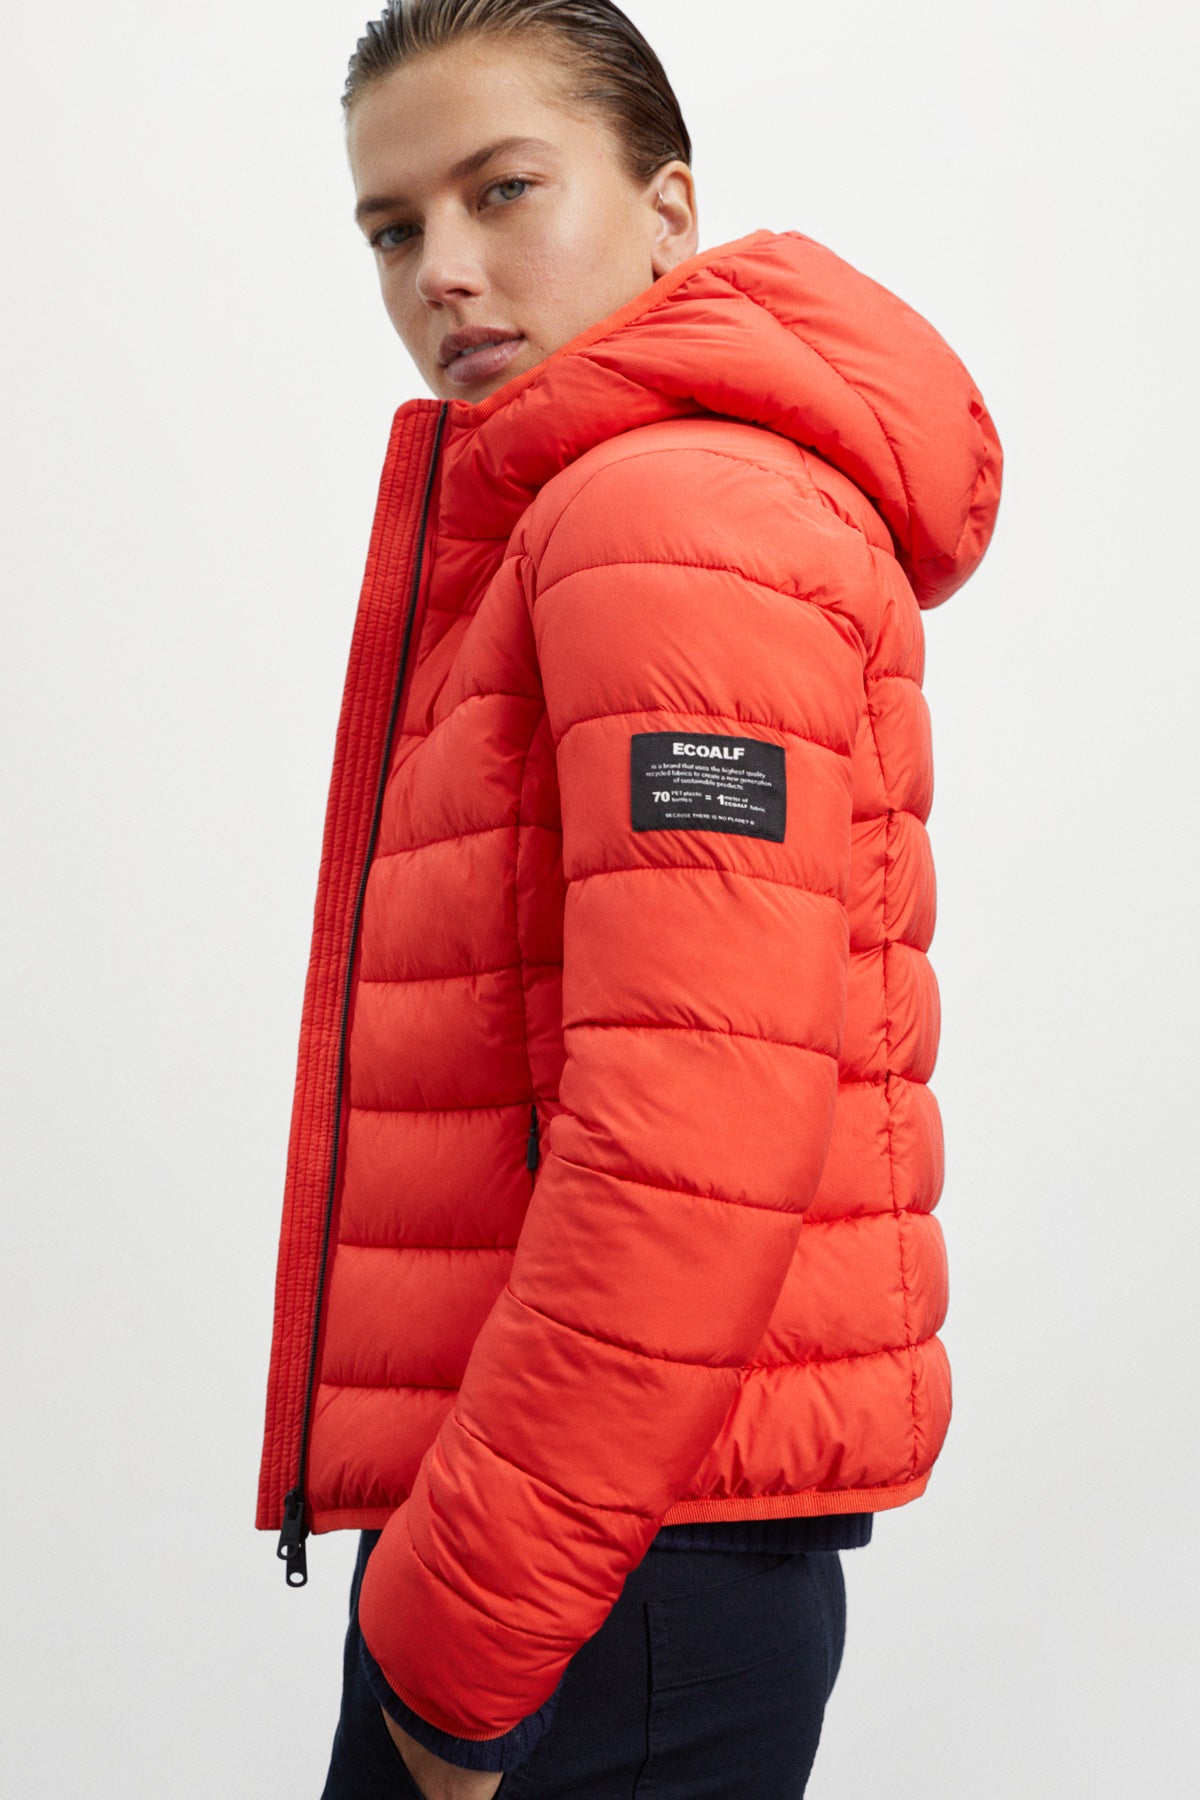 Aspen jacket with a hood for the rain | ECOALF